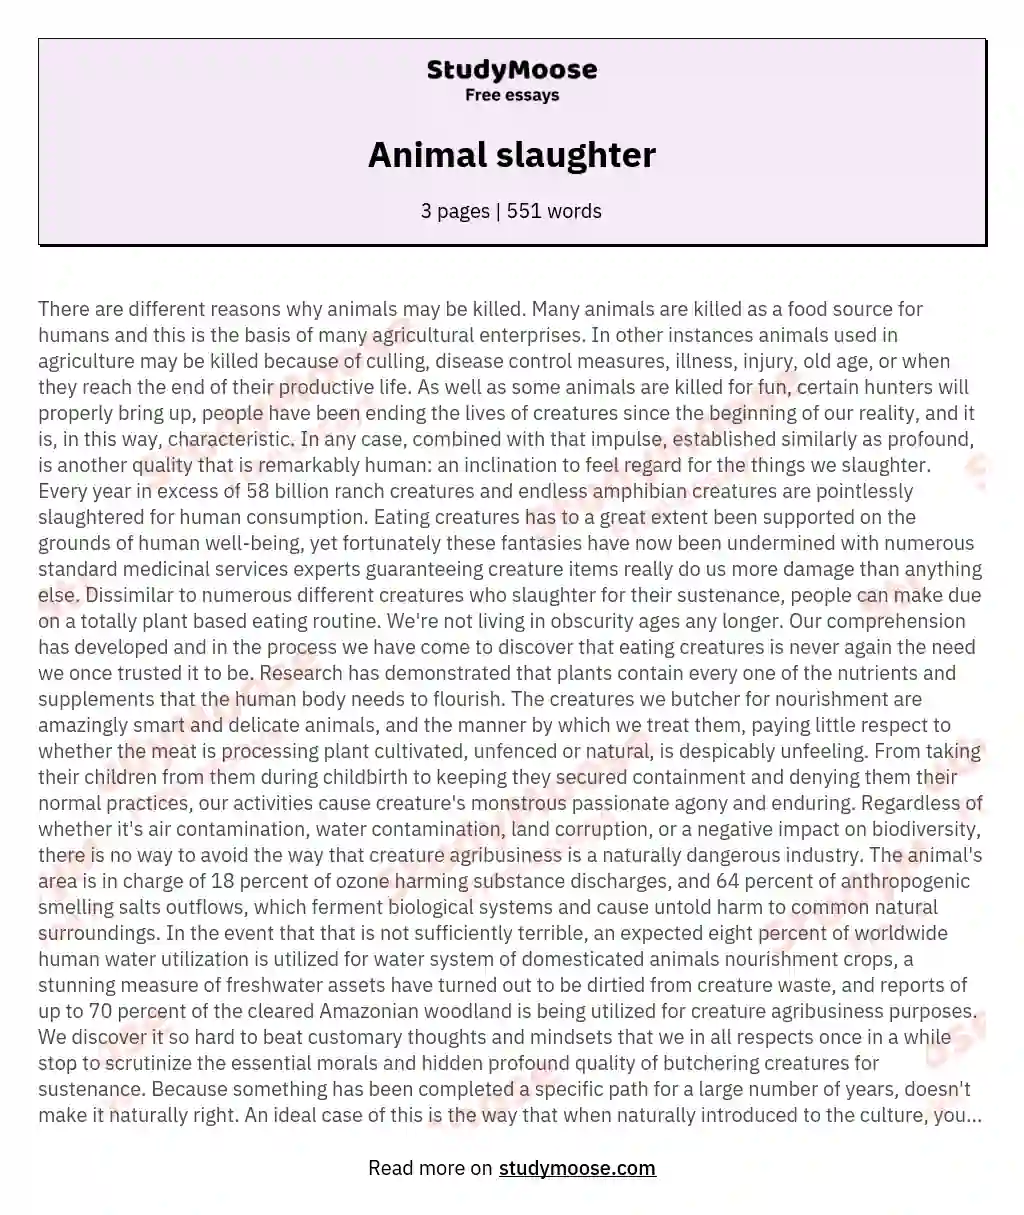 Animal slaughter essay